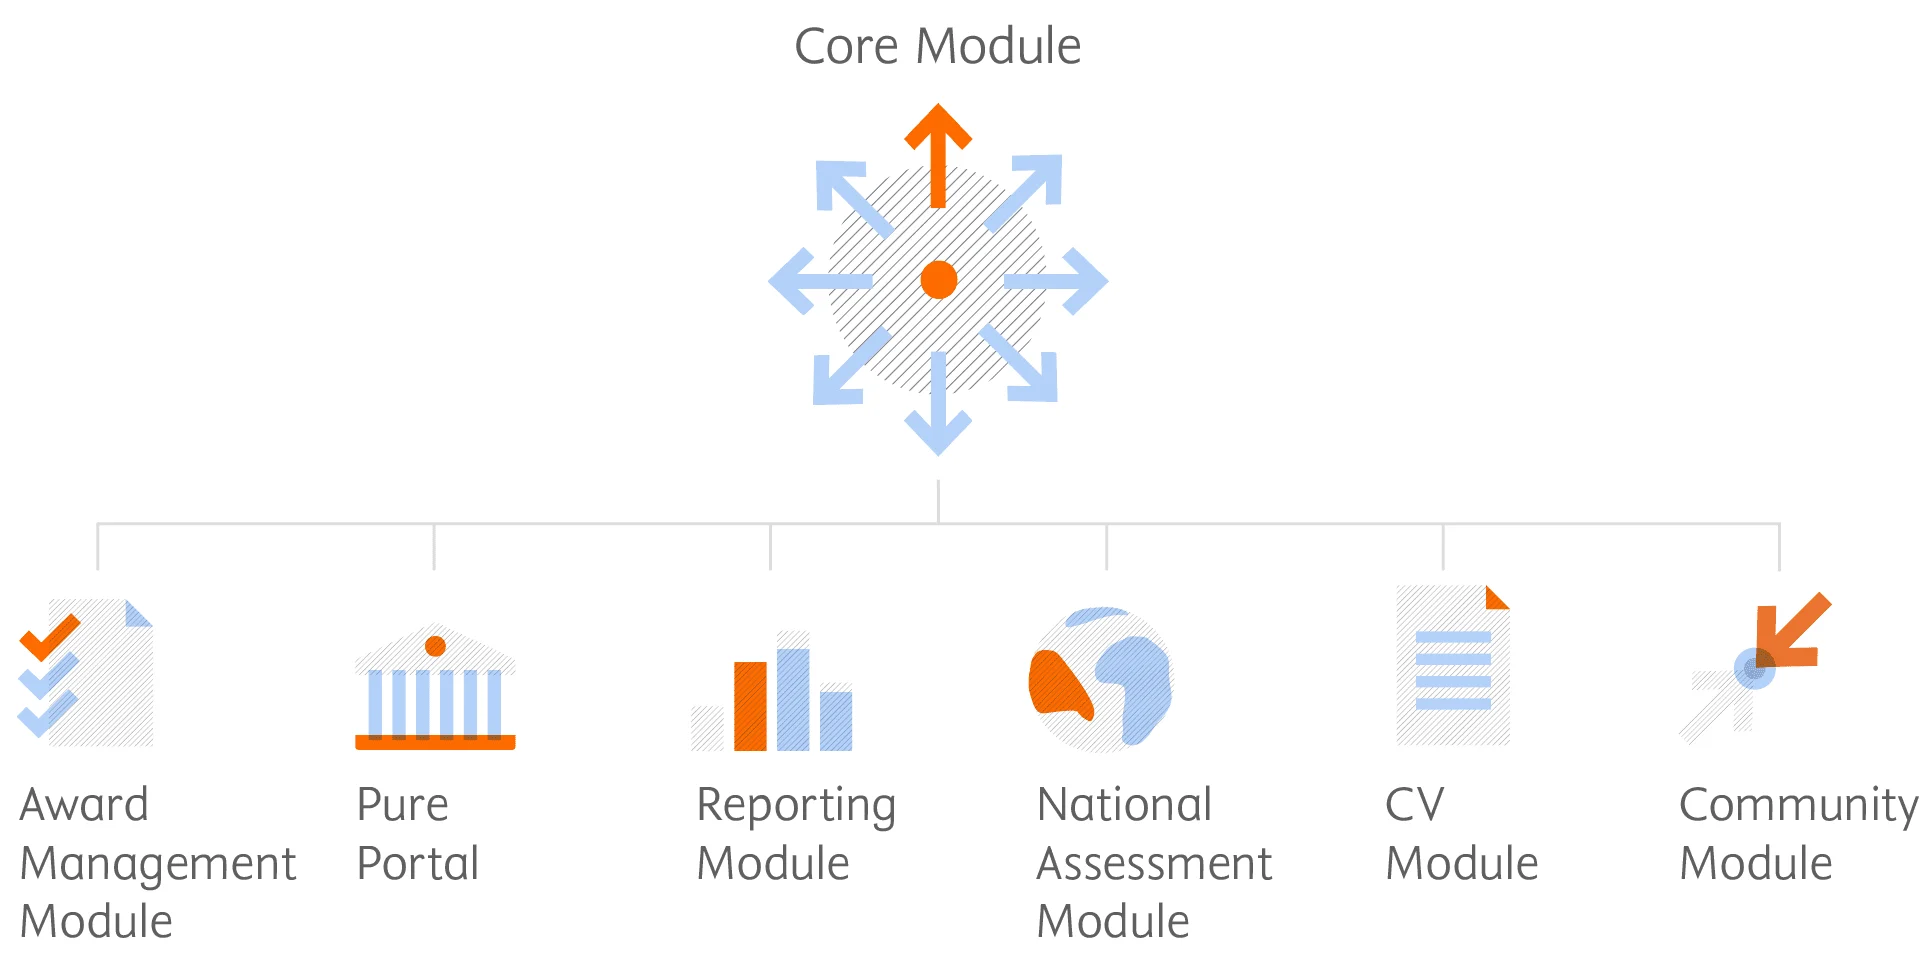 Pure モジュールの概略図： Core Module, Award Management Module, Pure Portal, Reporting Module, National Assessment Module, CV Module, Community Module